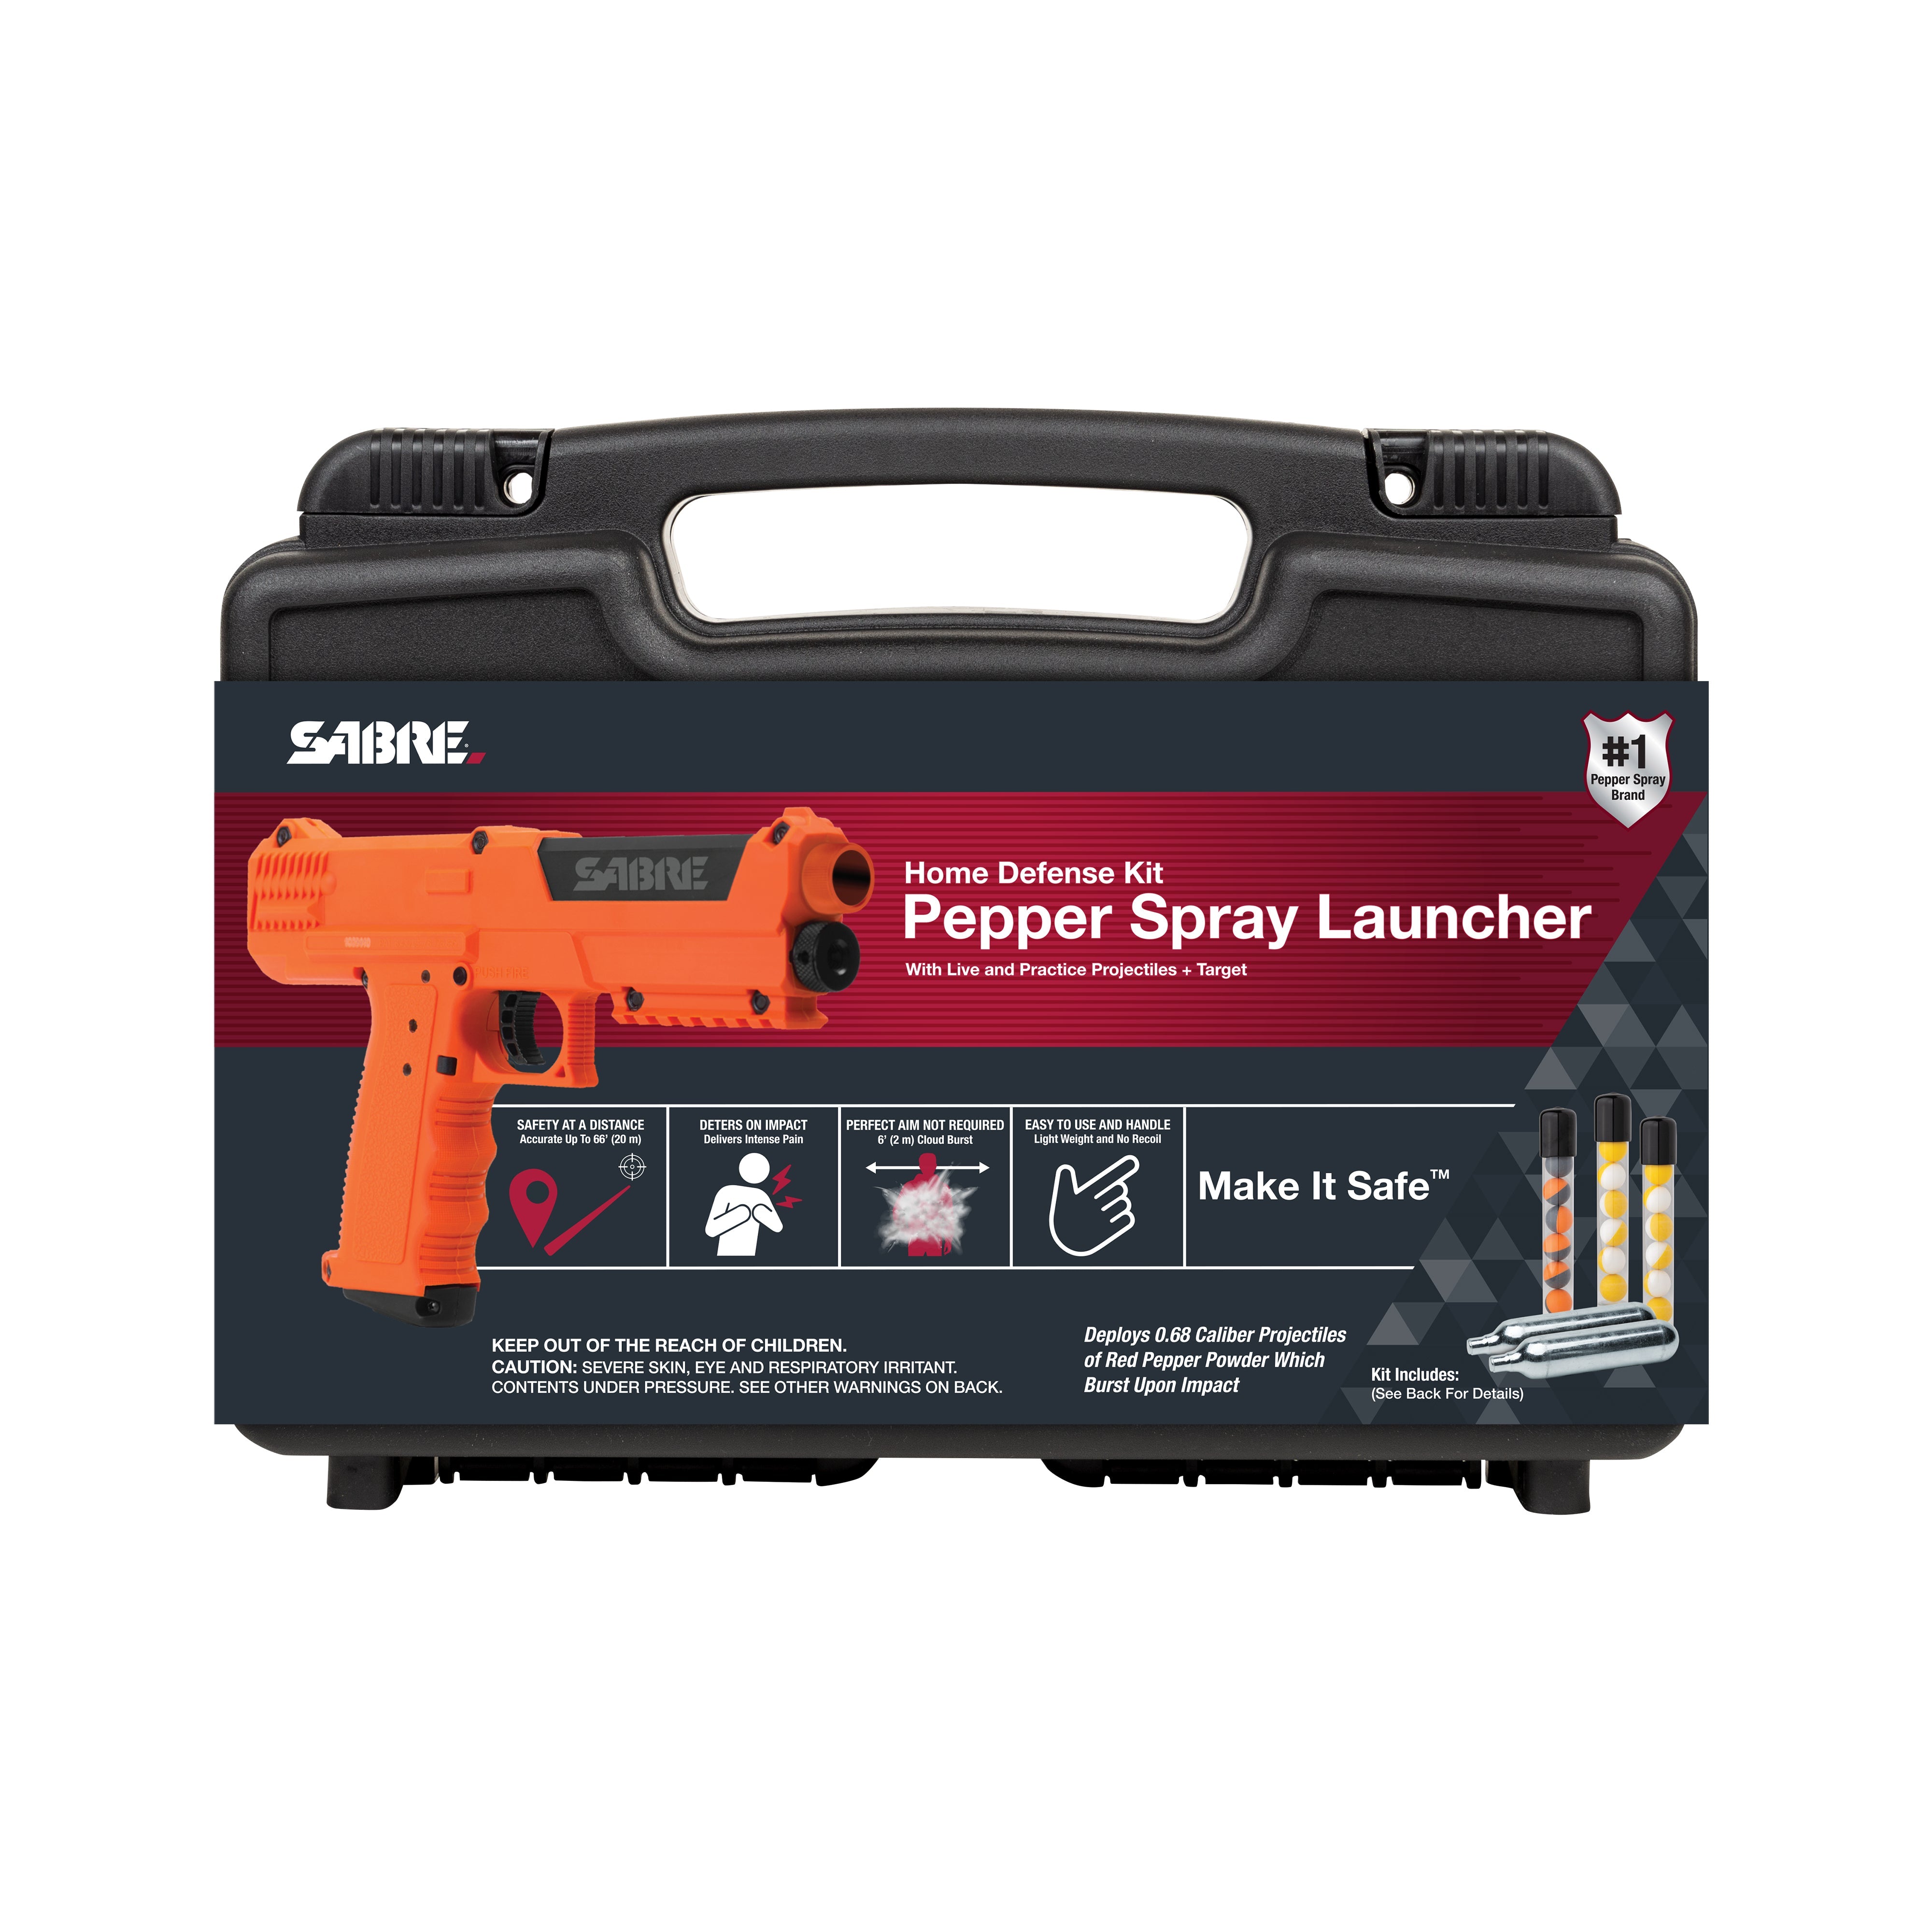 Home Defense Pepper Spray Launcher